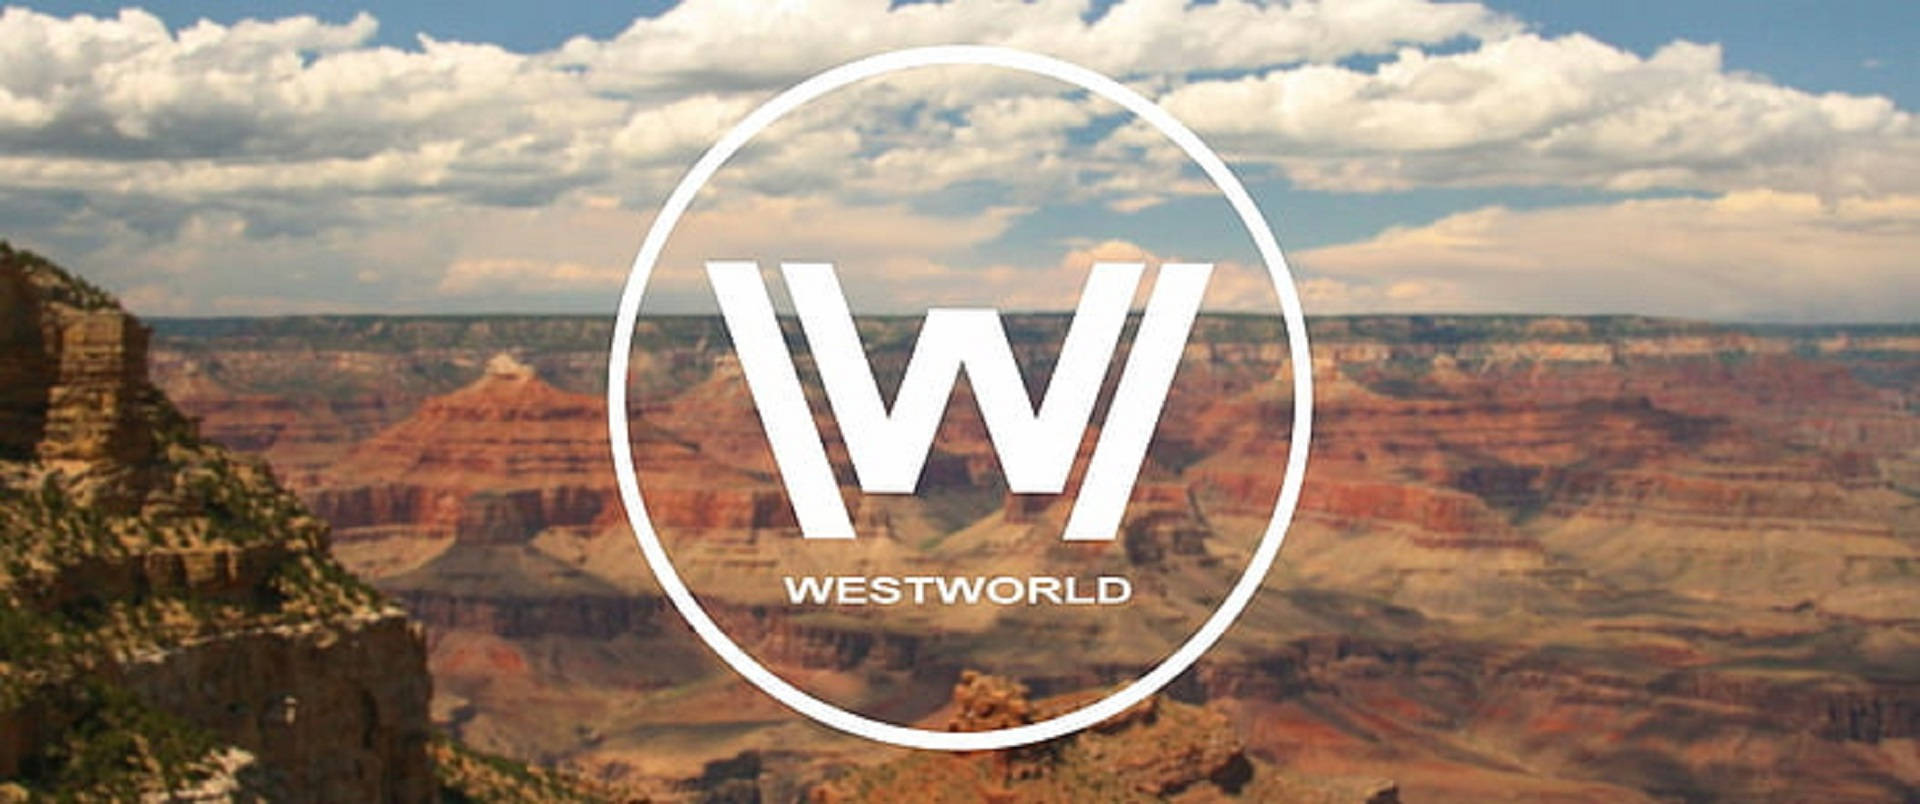 Westworld Logo In Mountain Cliff